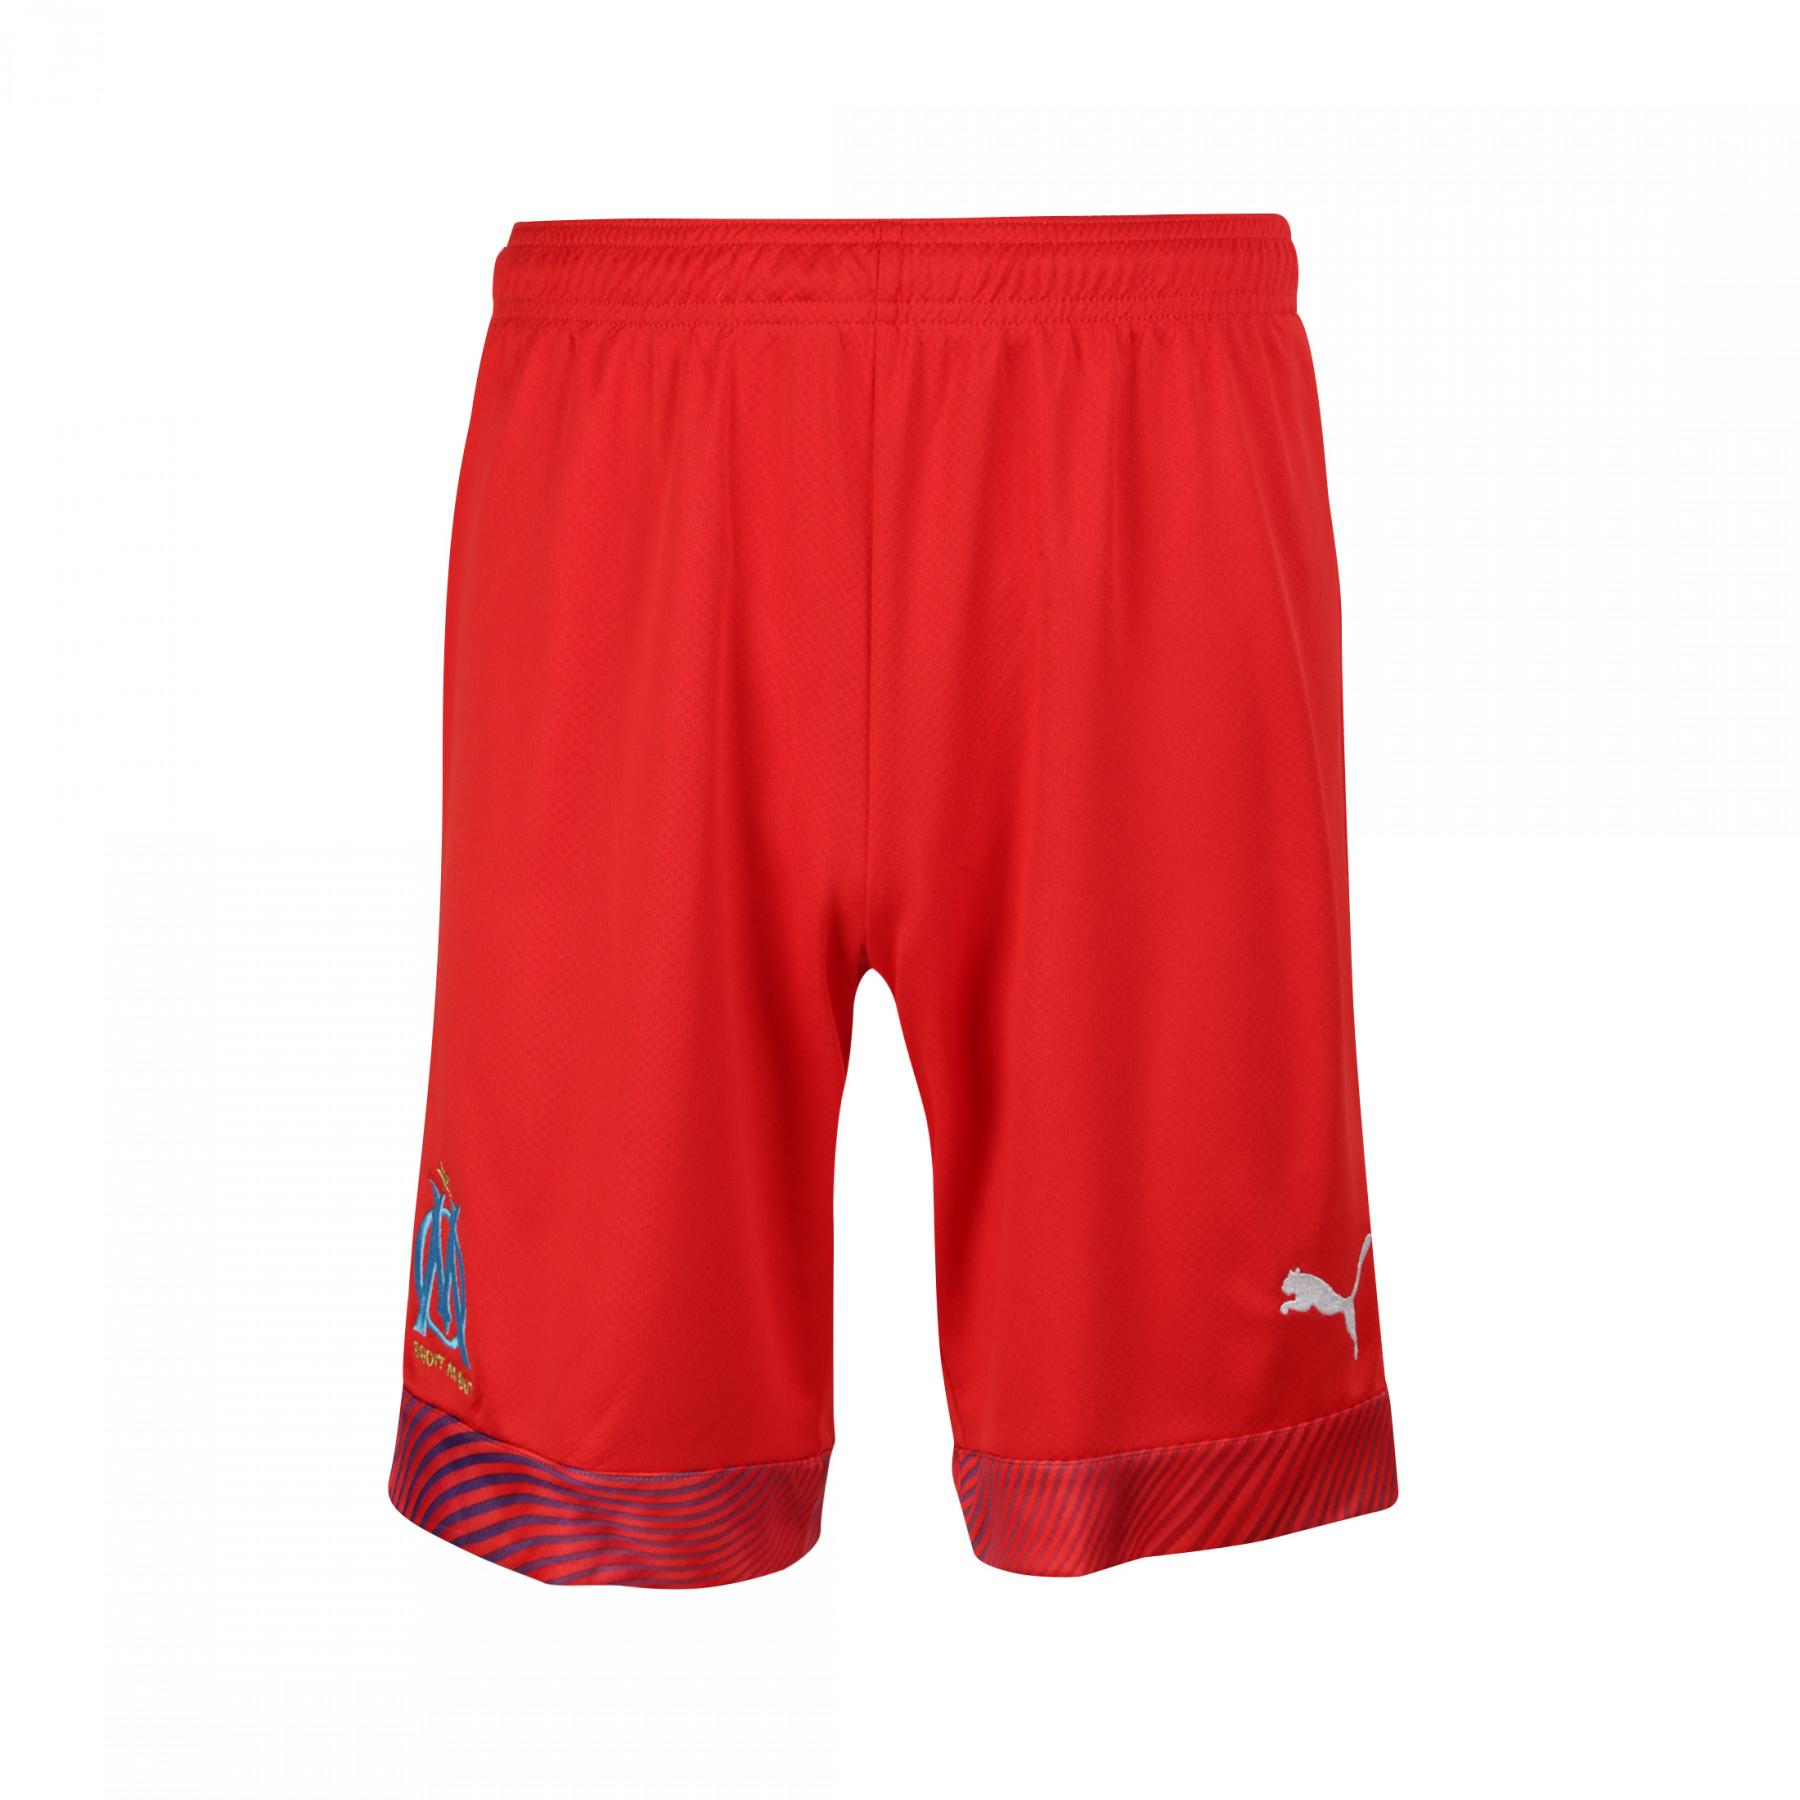 Goalkeeper shorts OM